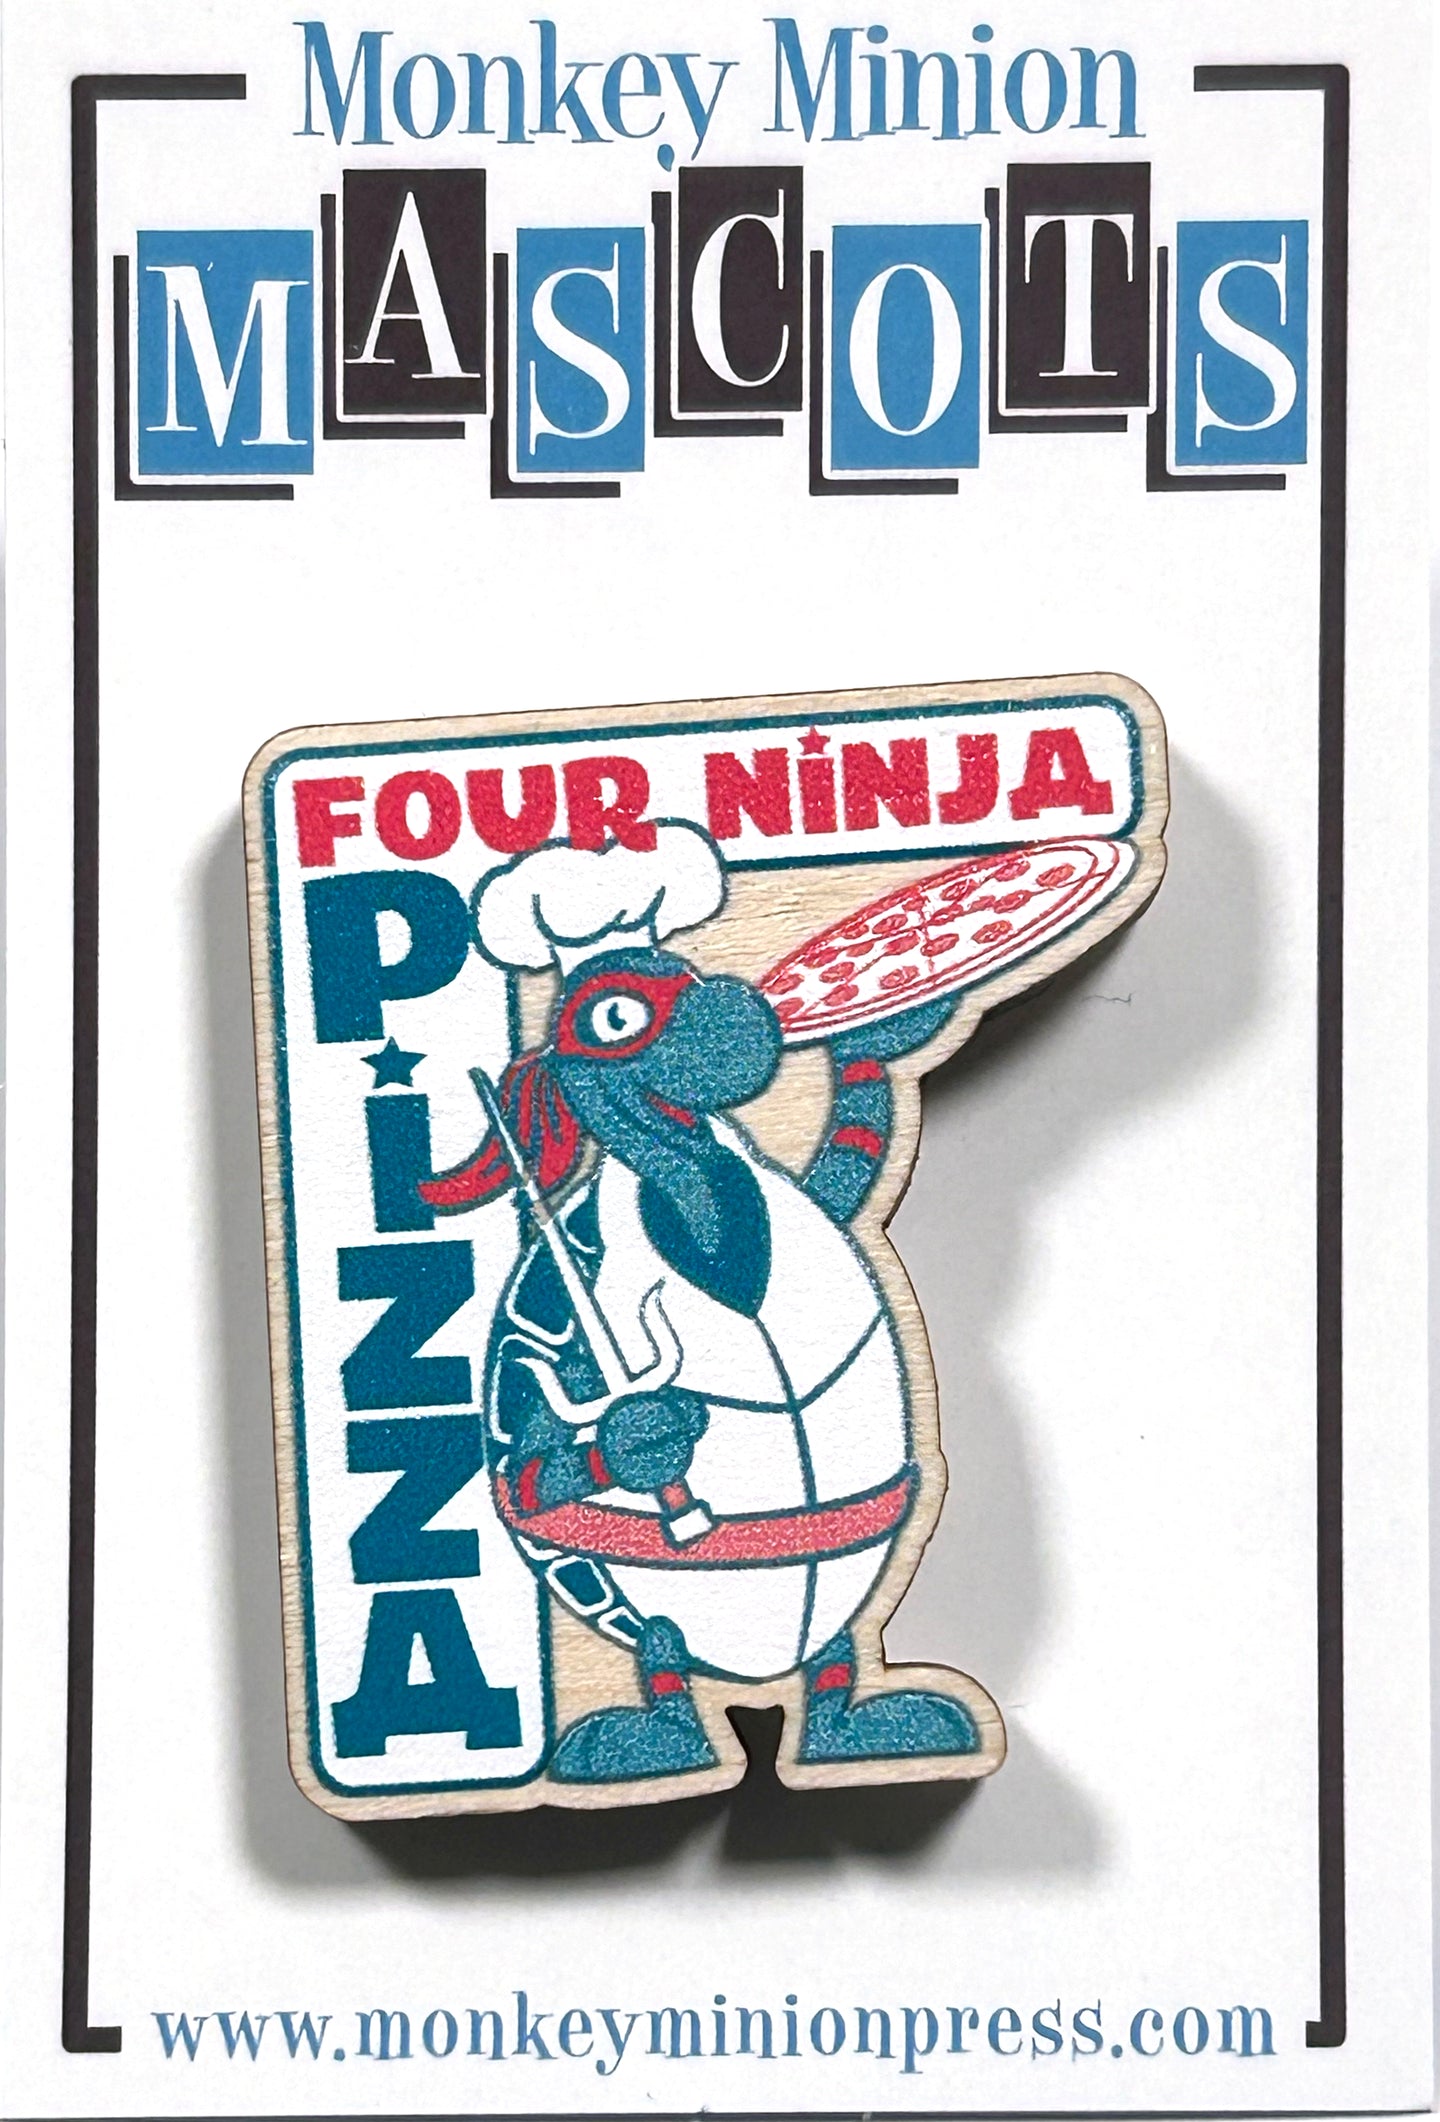 Mascots 4 Ninja Pizza Wooden Pin